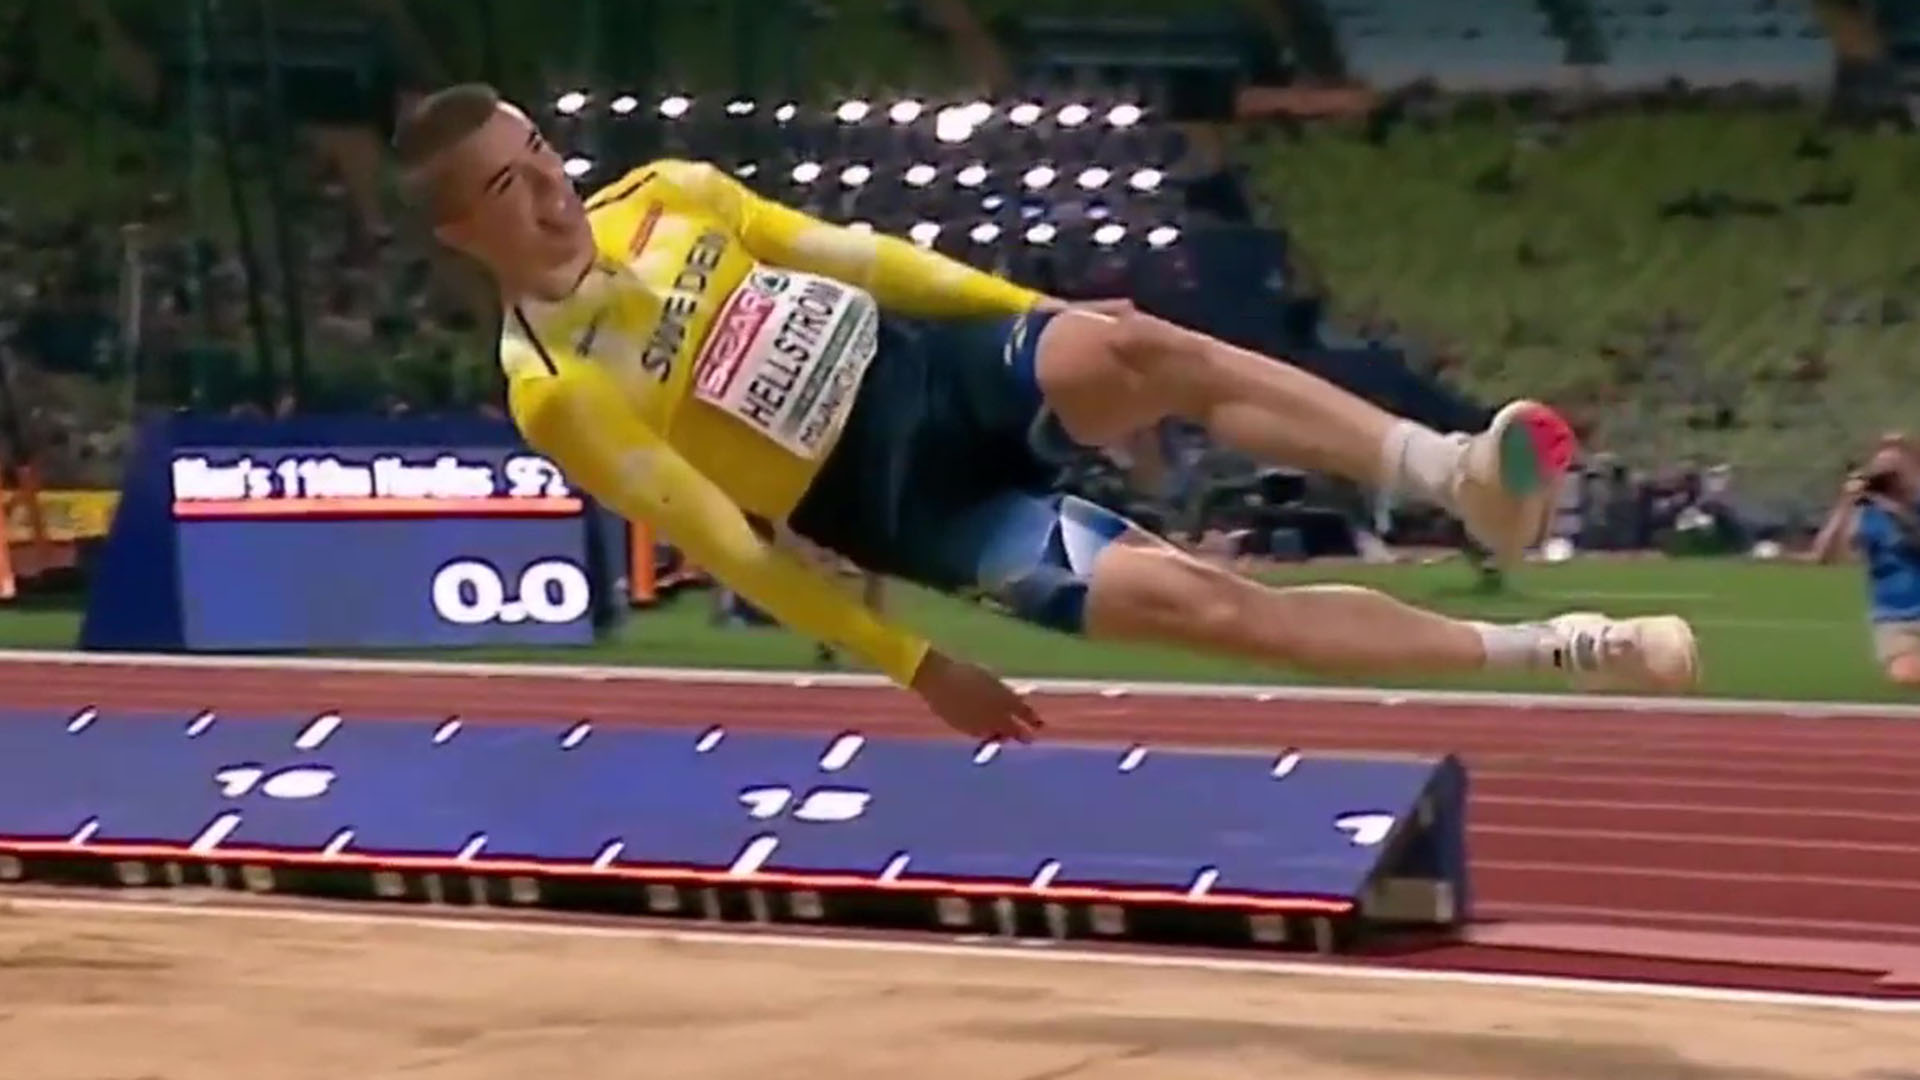 El inédito “salto de salmón” de un atleta sueco que asombró a todos